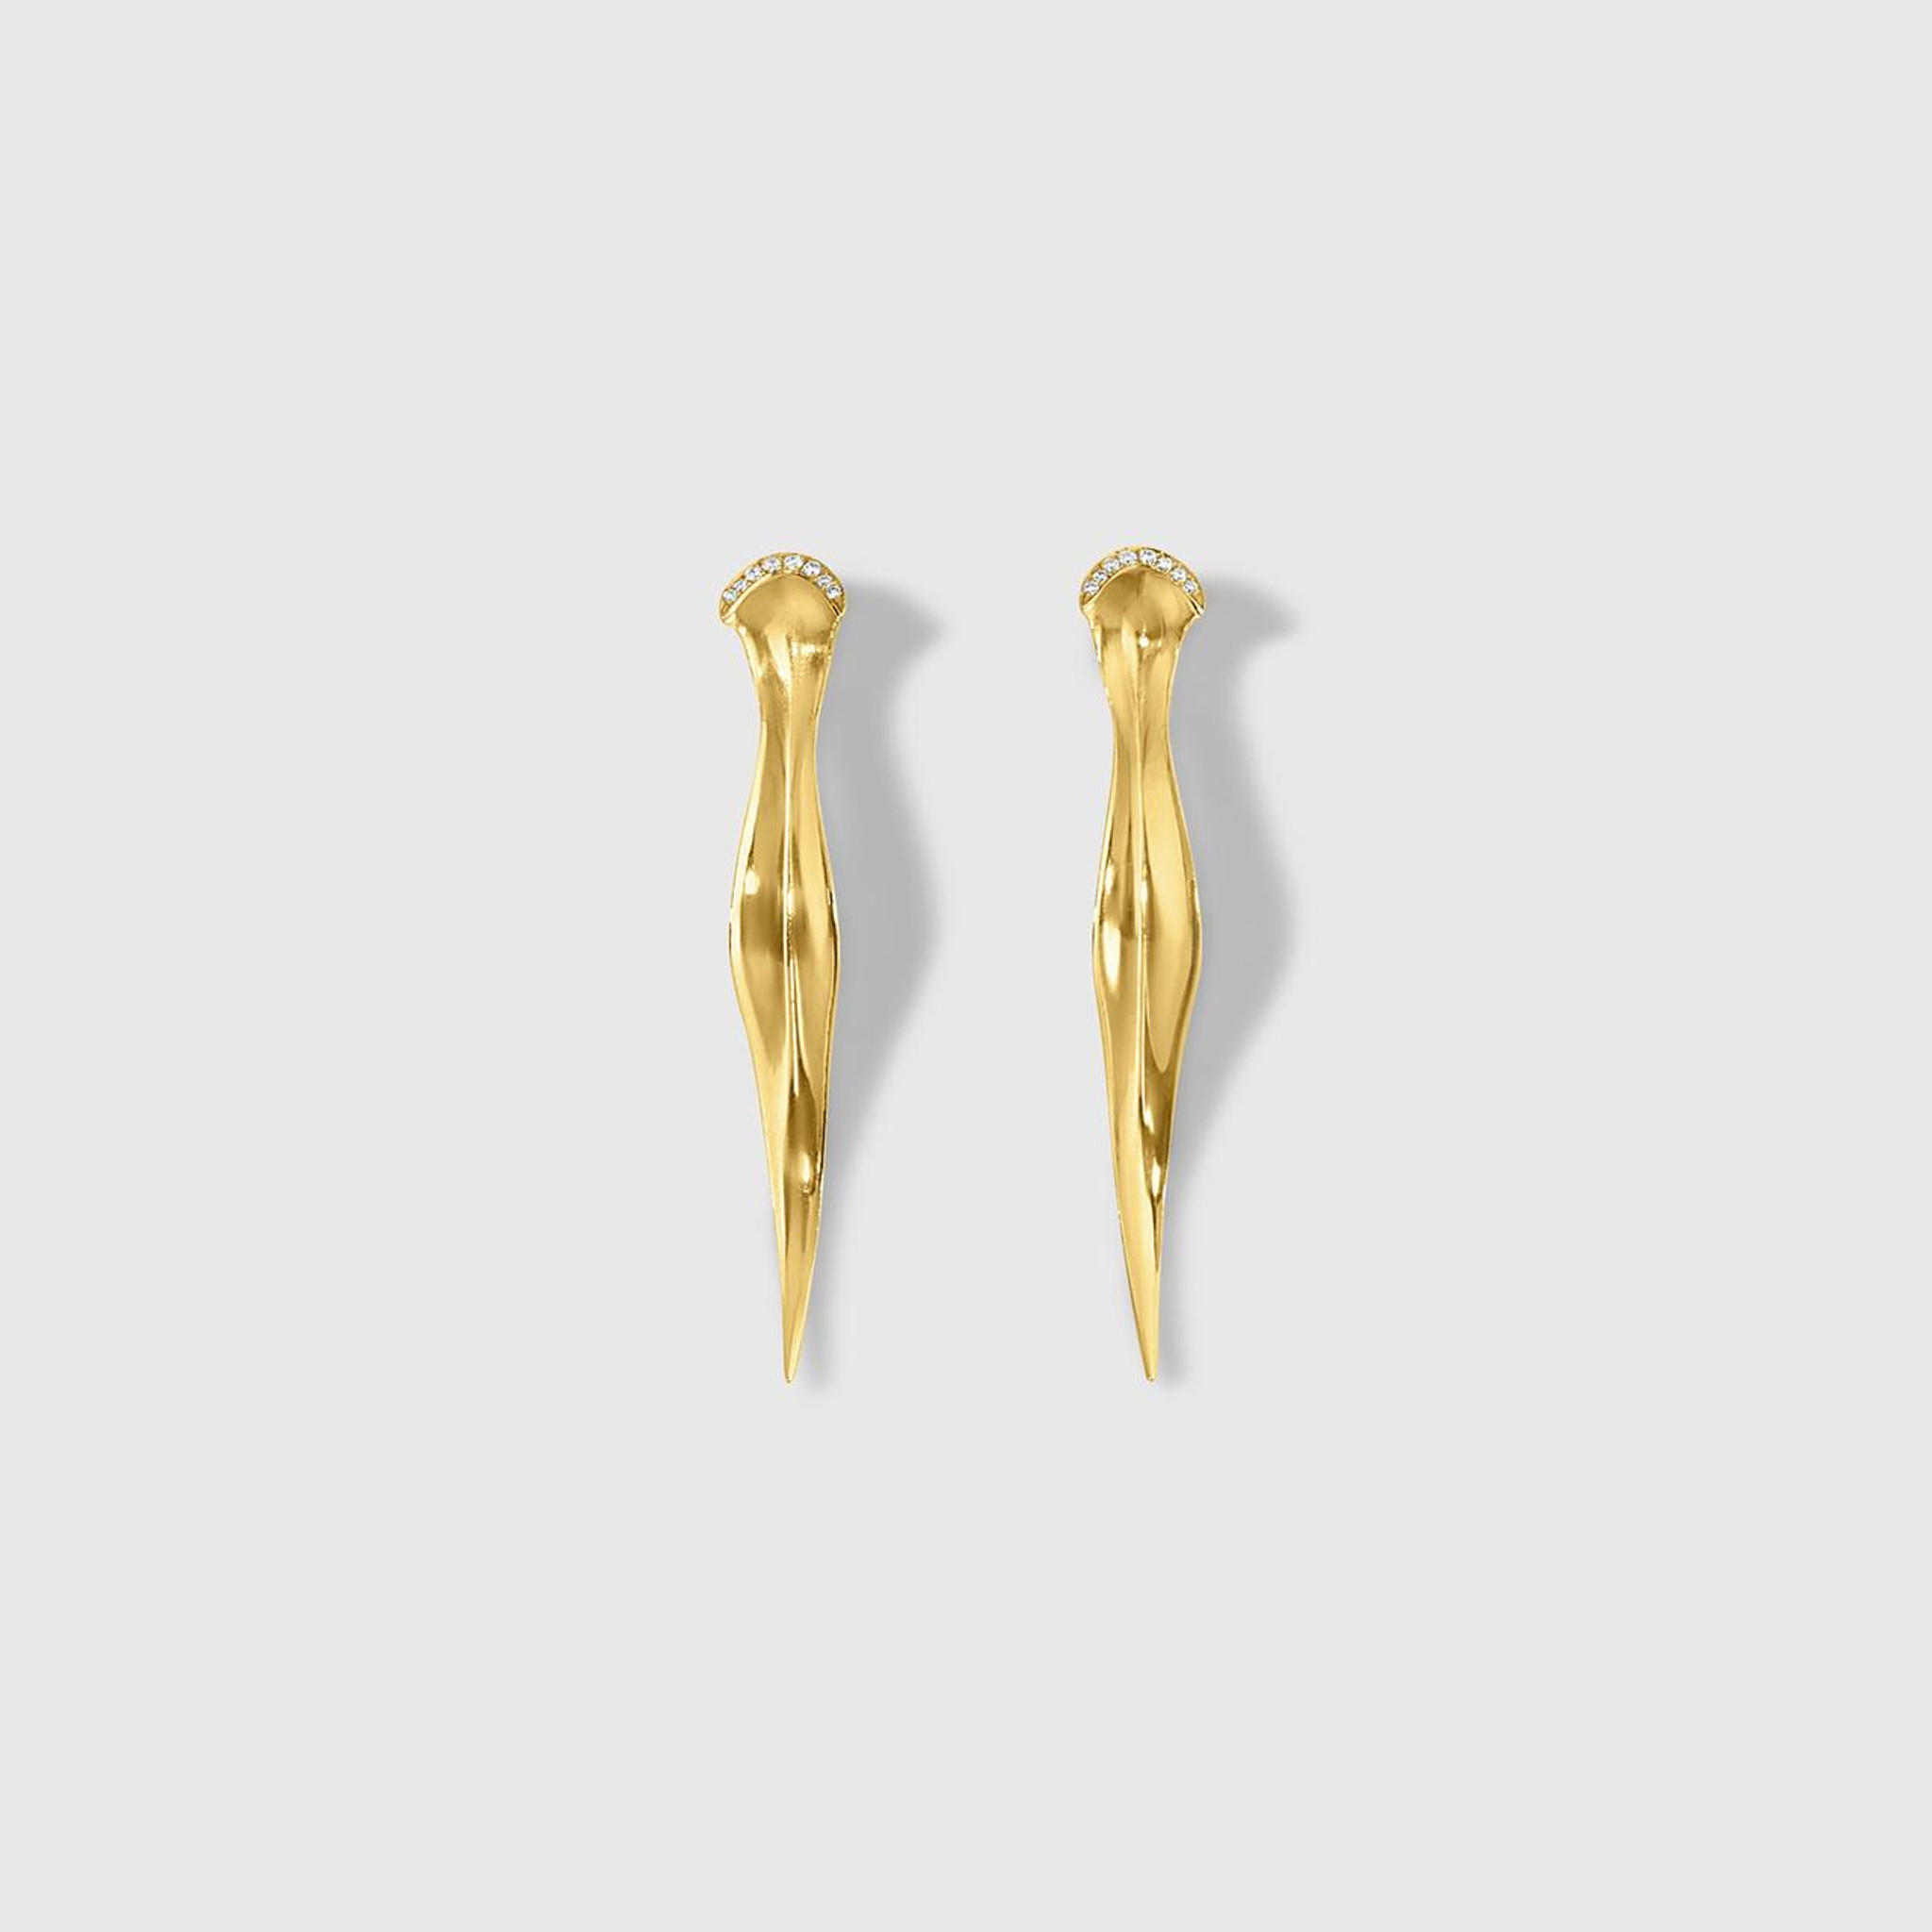 Ashley Childs Persephone Earrings, 18kt Yellow Gold & Diamond Earrings 